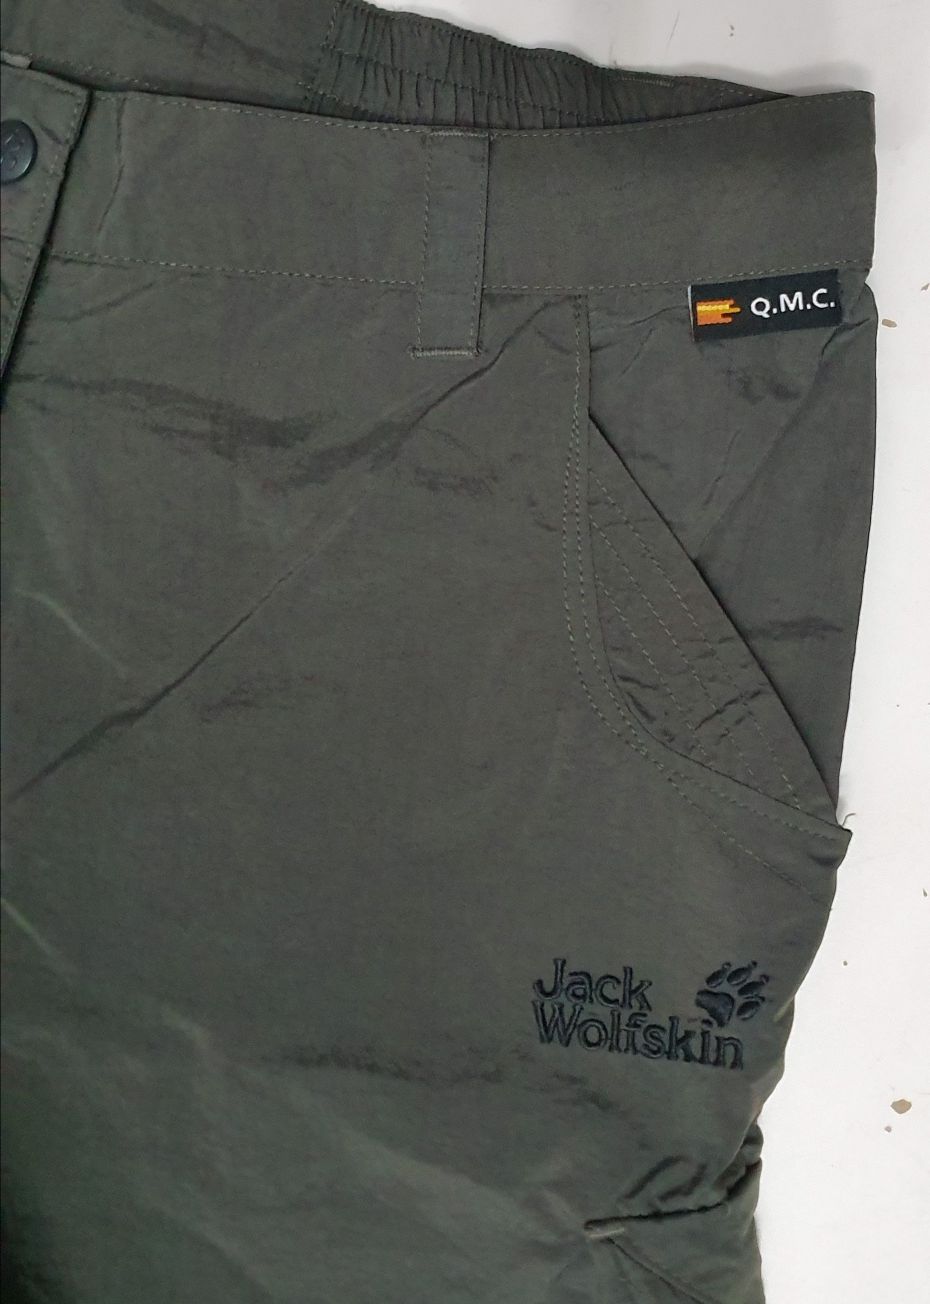 JACK WOLFSKIN UV SHIELD roz 38 pas 80cm spodnie trekking outdoor Q.M.C